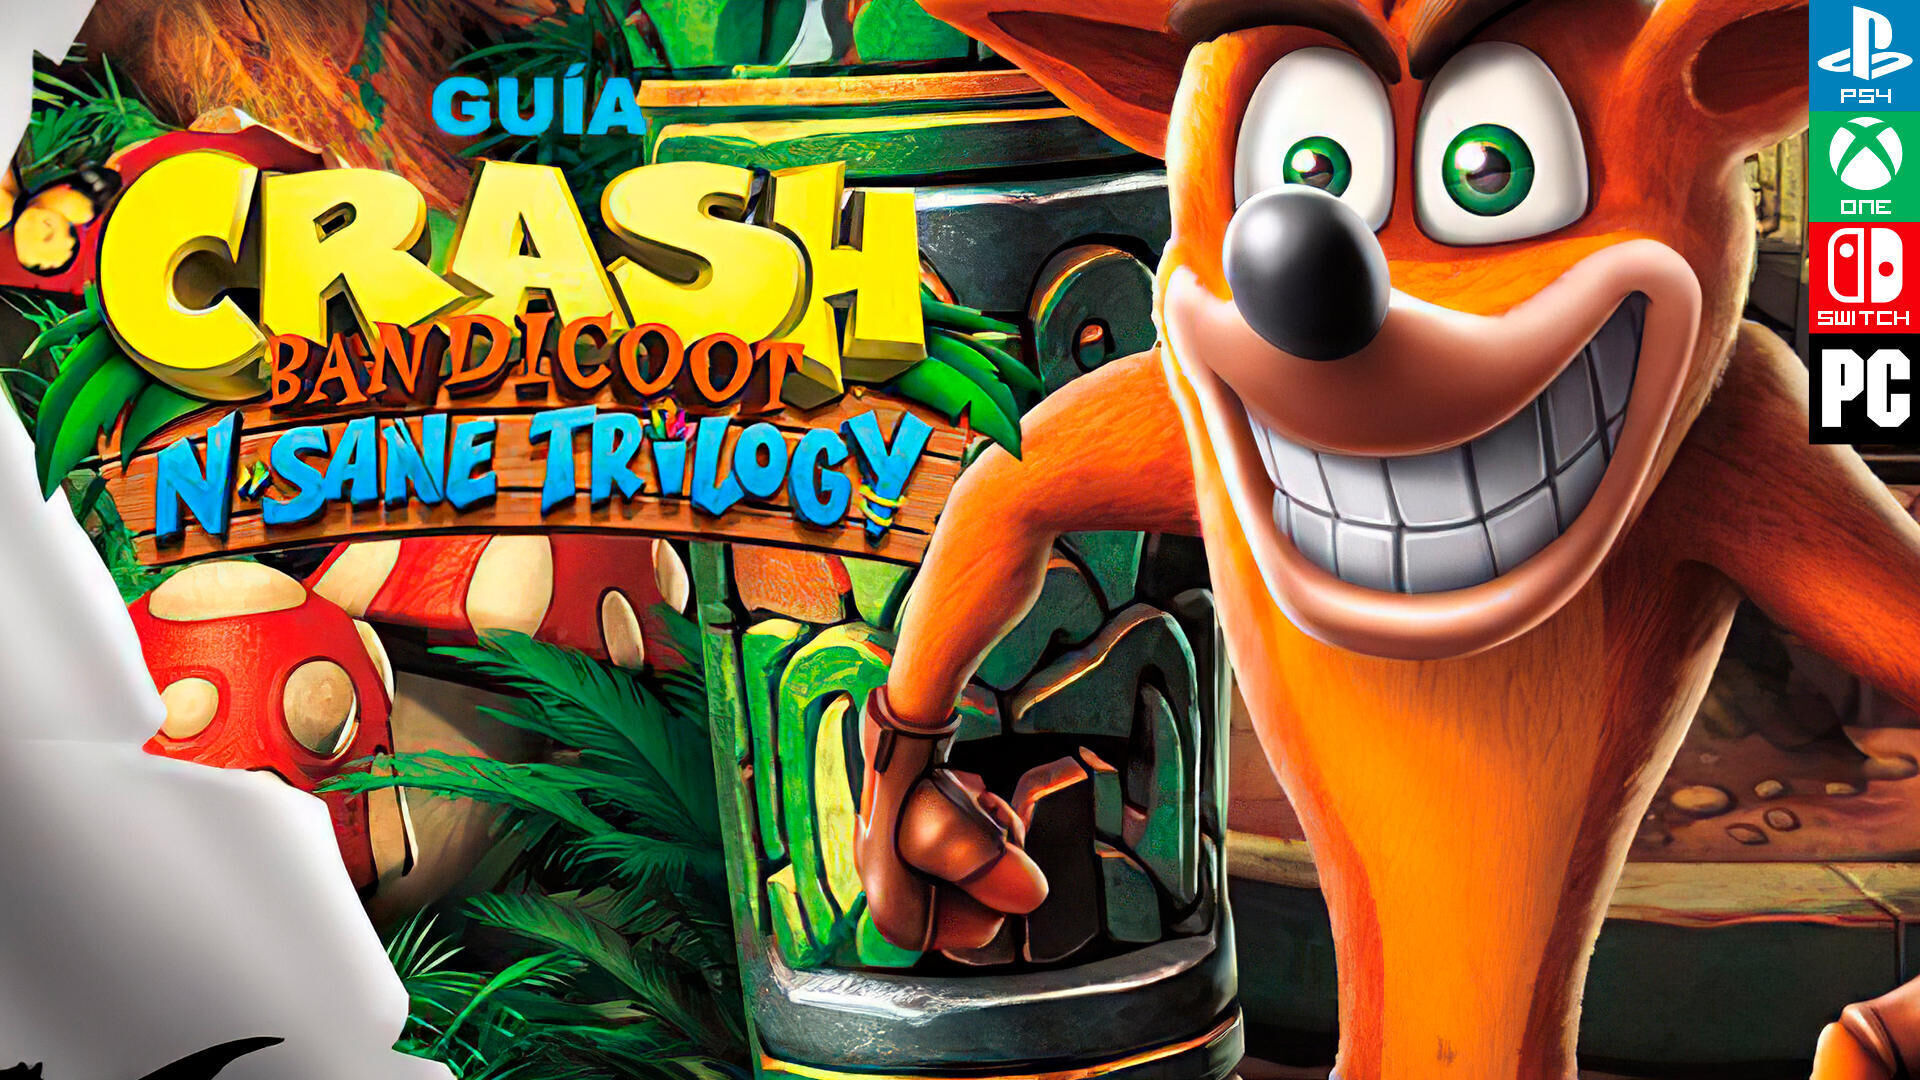 Crash Bandicoot PS4 - Como derrotar todos os Bosses